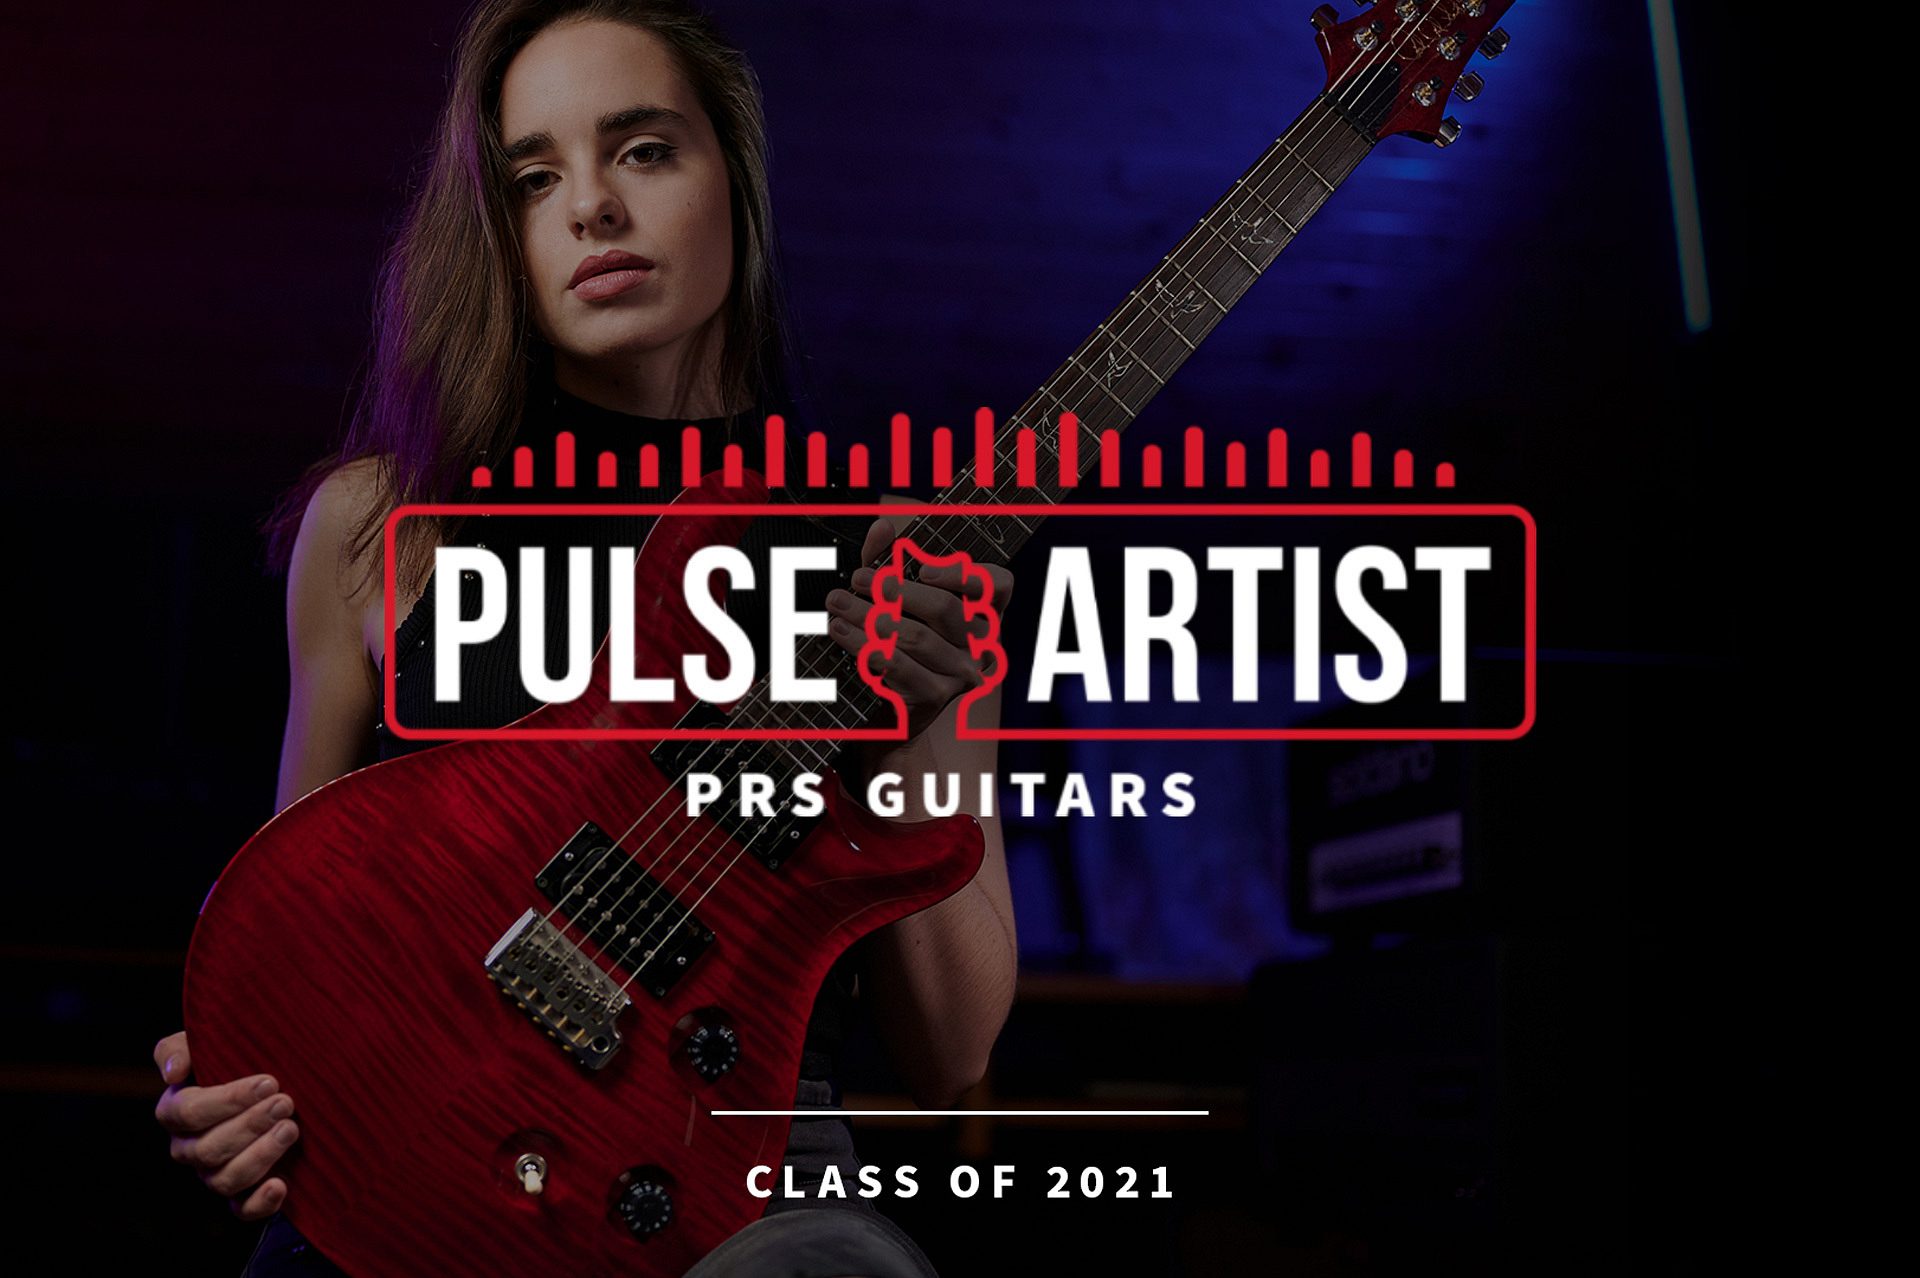 Listen to the Class of 2021 Pulse Artist Playlist